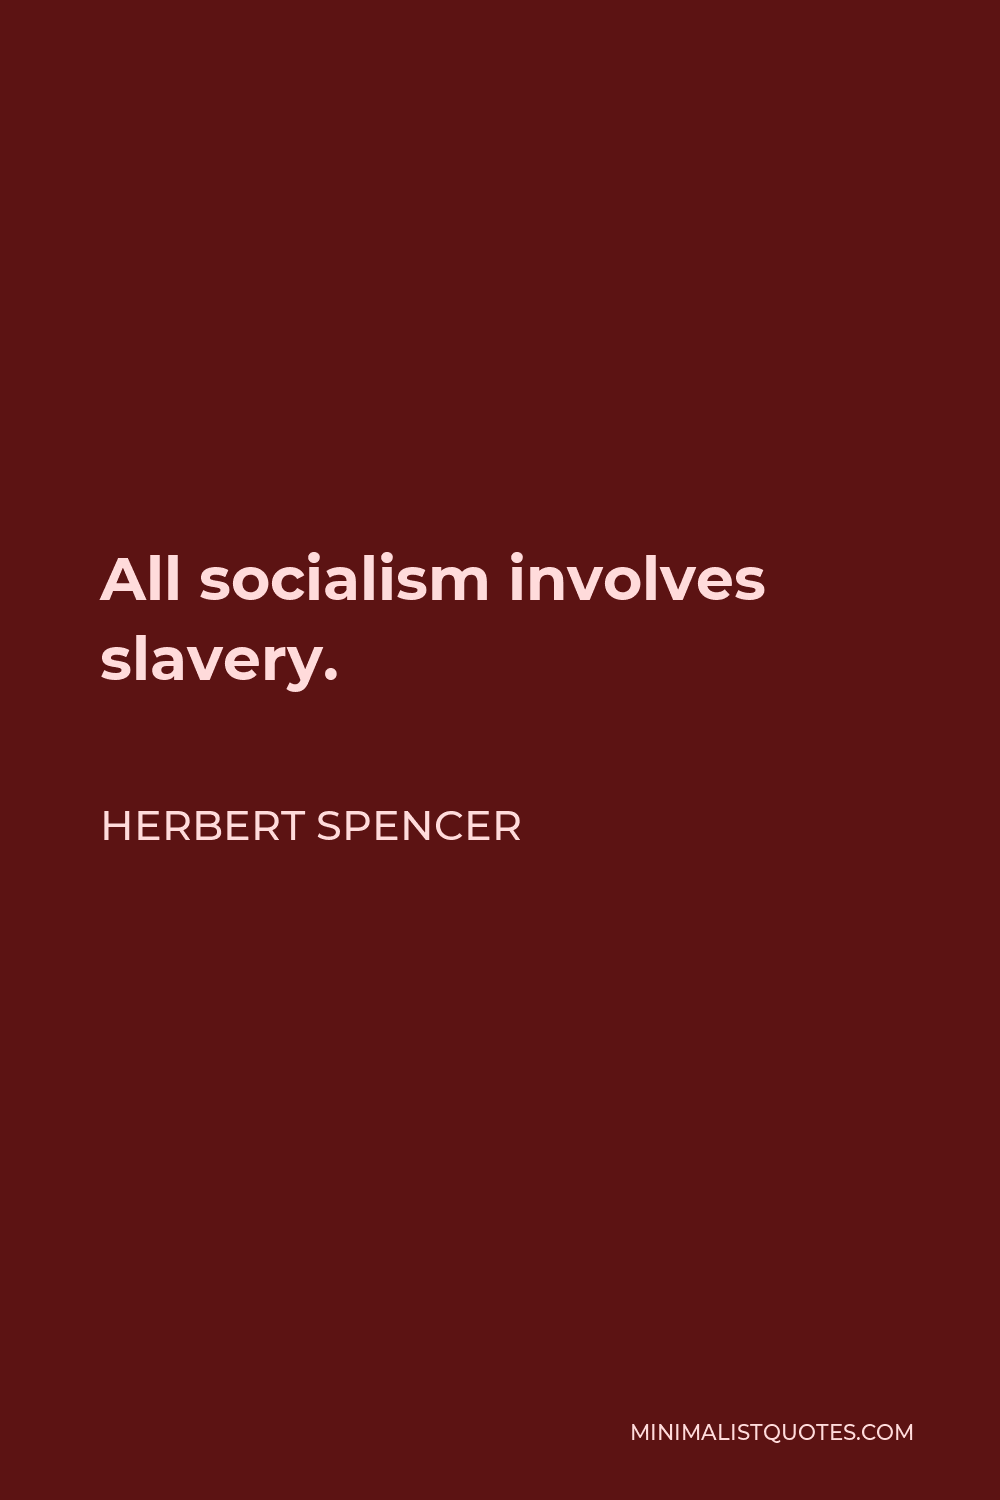 Herbert Spencer Quote - All socialism involves slavery.